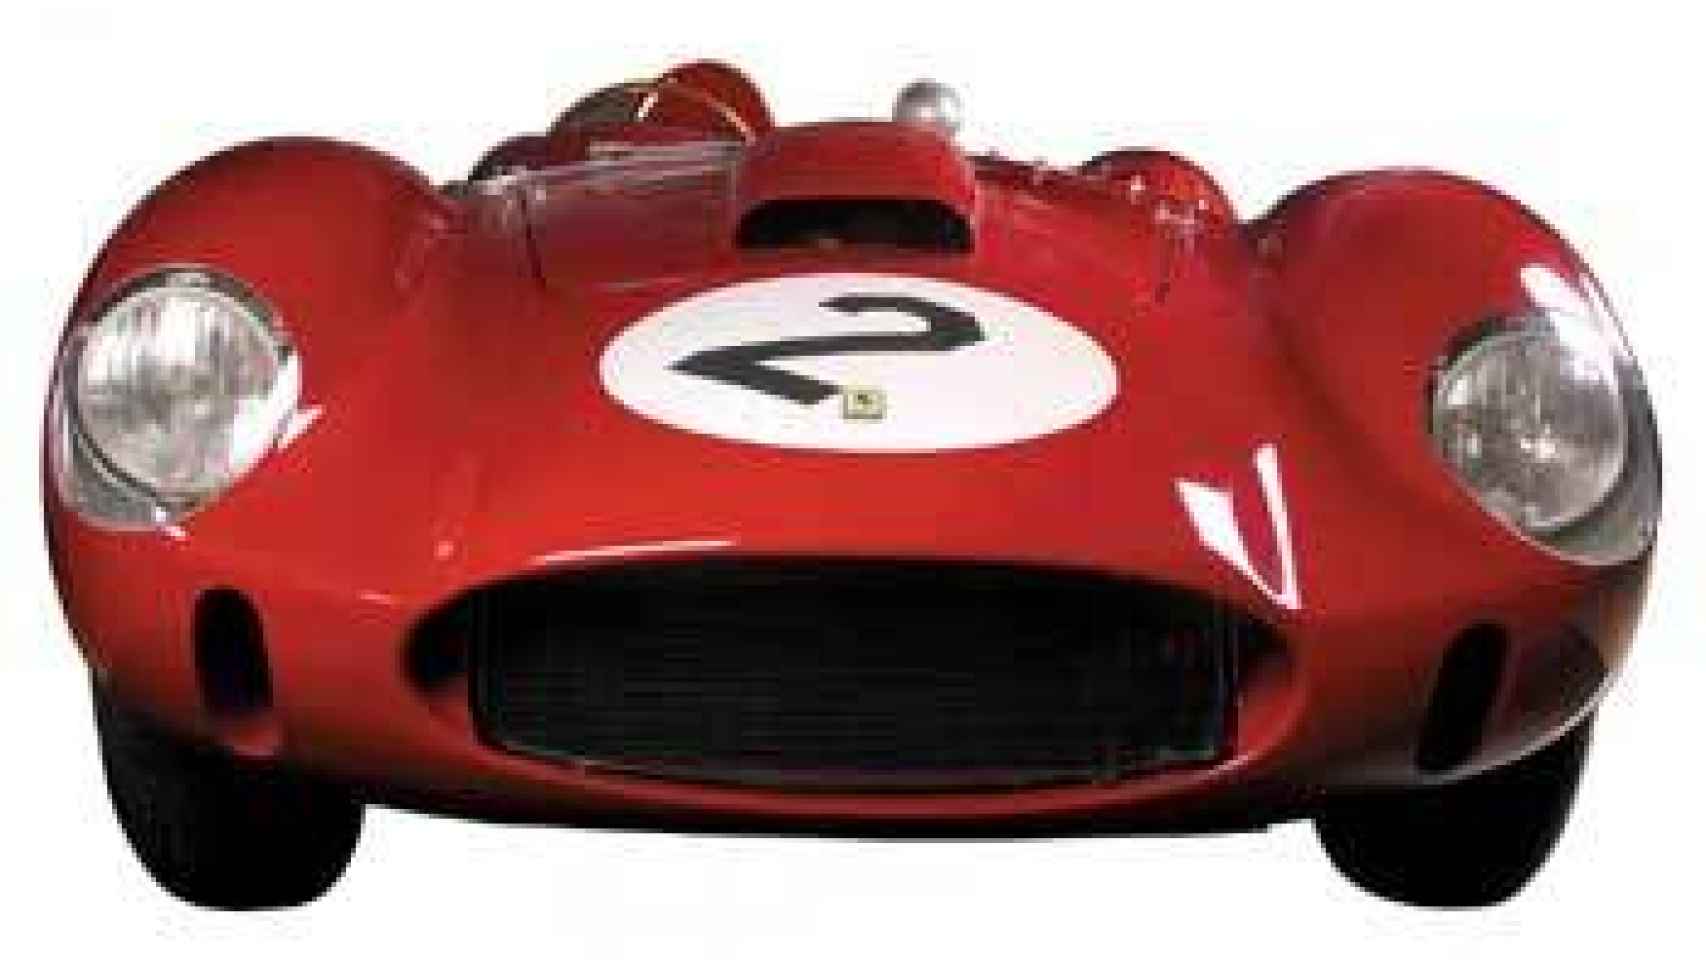 Image: Ferrari busca el podio